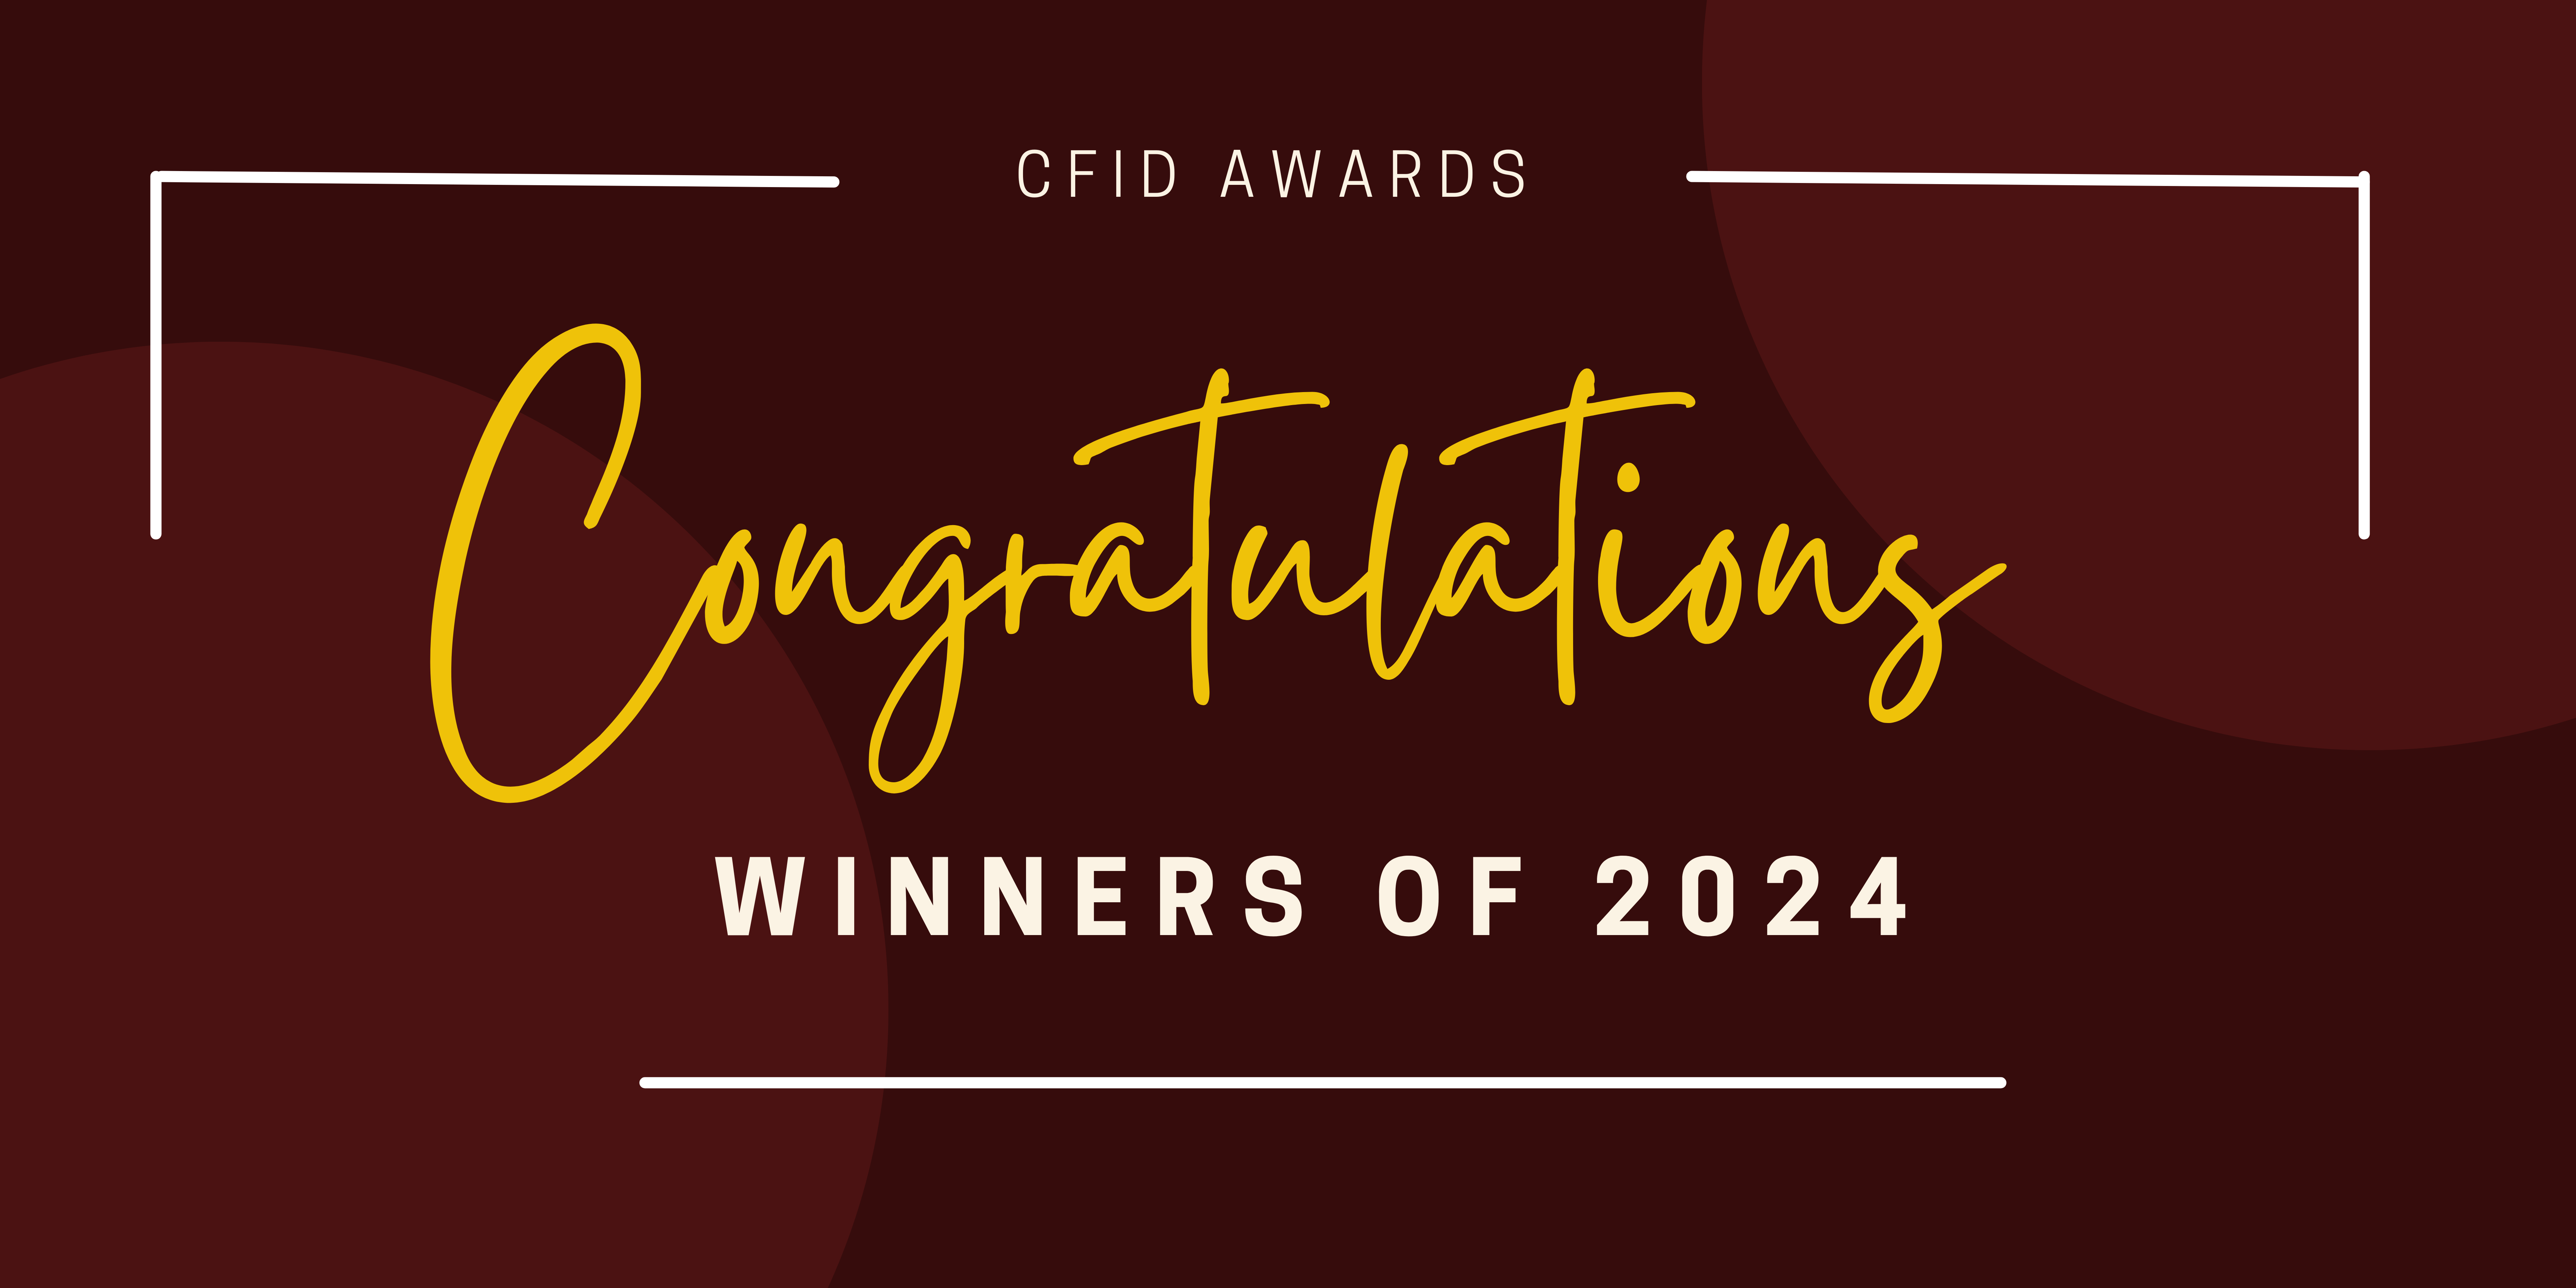 Congratulations to the 2024 CFID award winners.